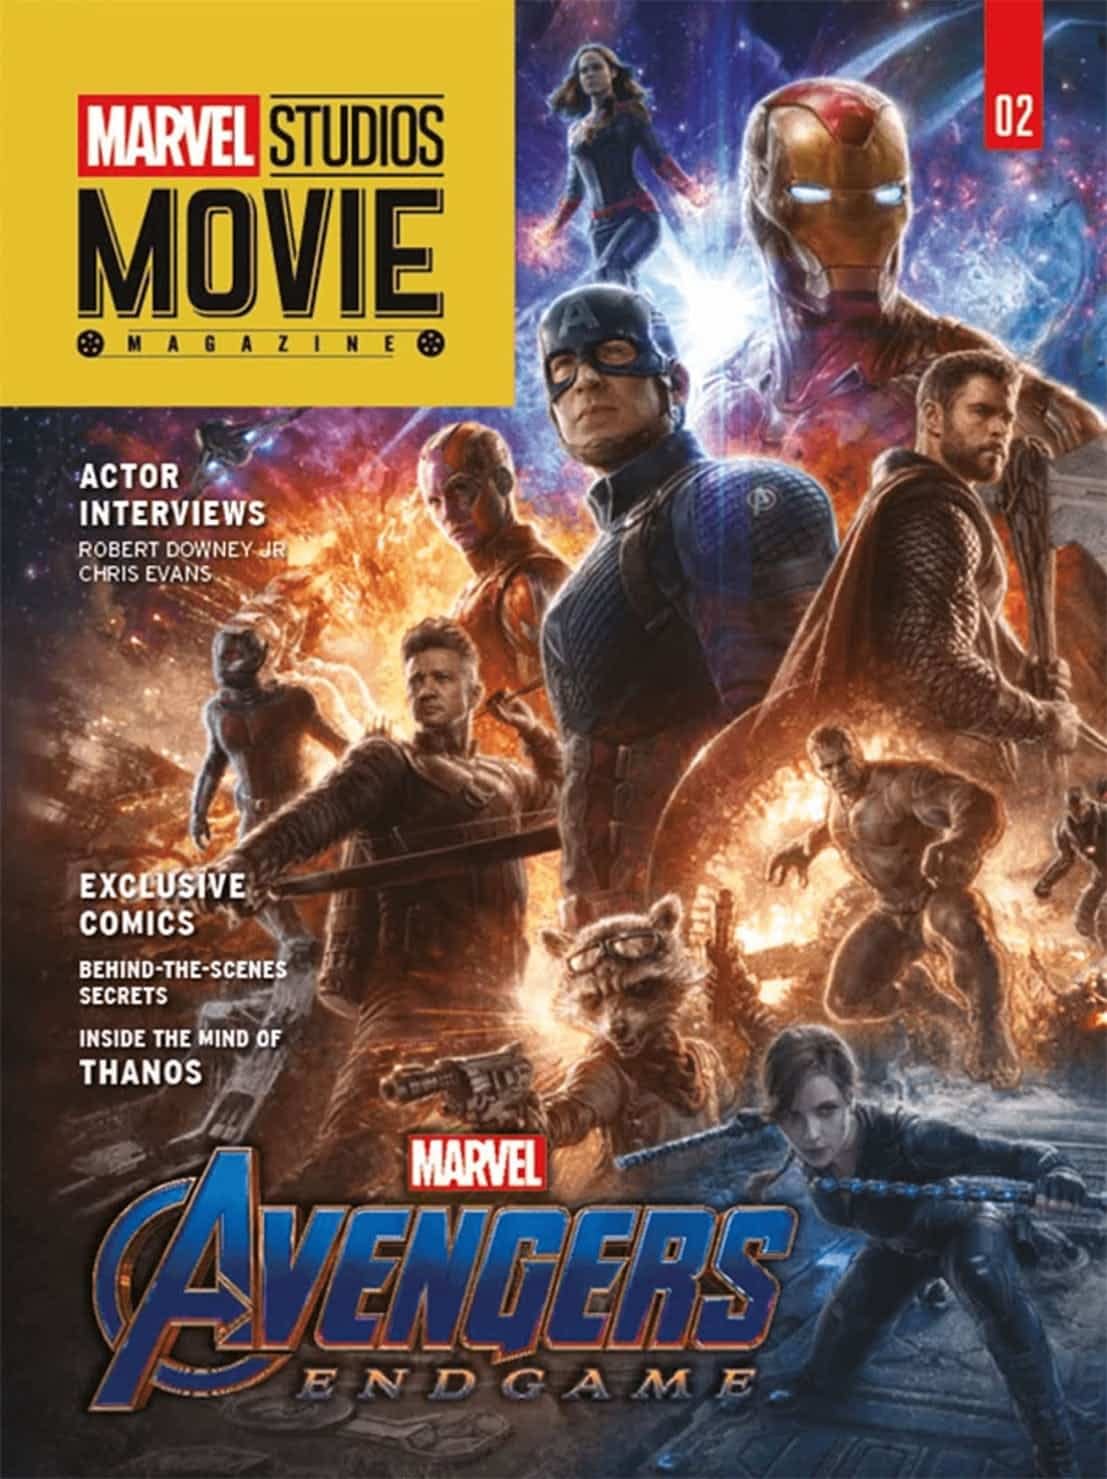 Avengers Assemble in this New Promo Image for Avengers: Endgame